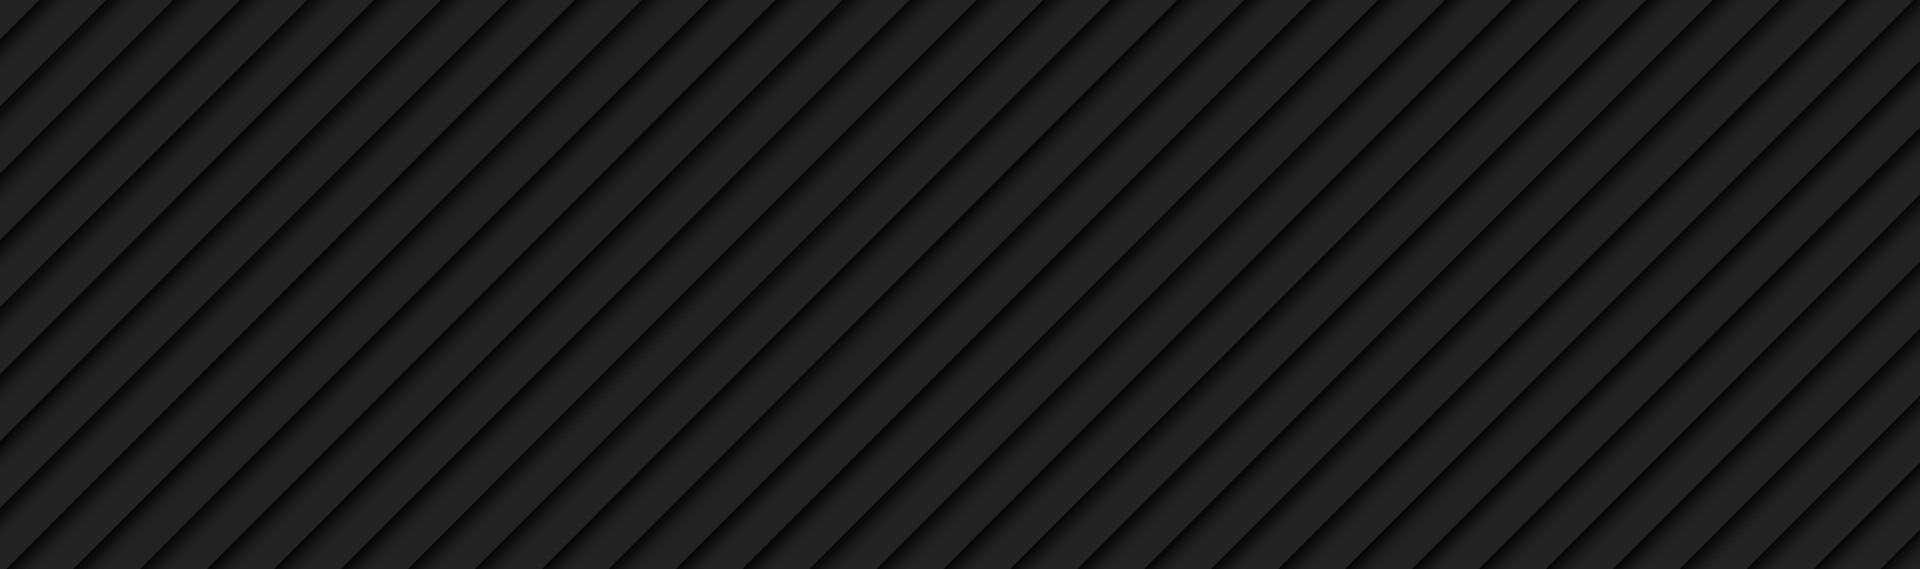 Tecnología negra rayas abstractas encabezado oscuro metálico diseño de banner geométrico ilustración vectorial vector